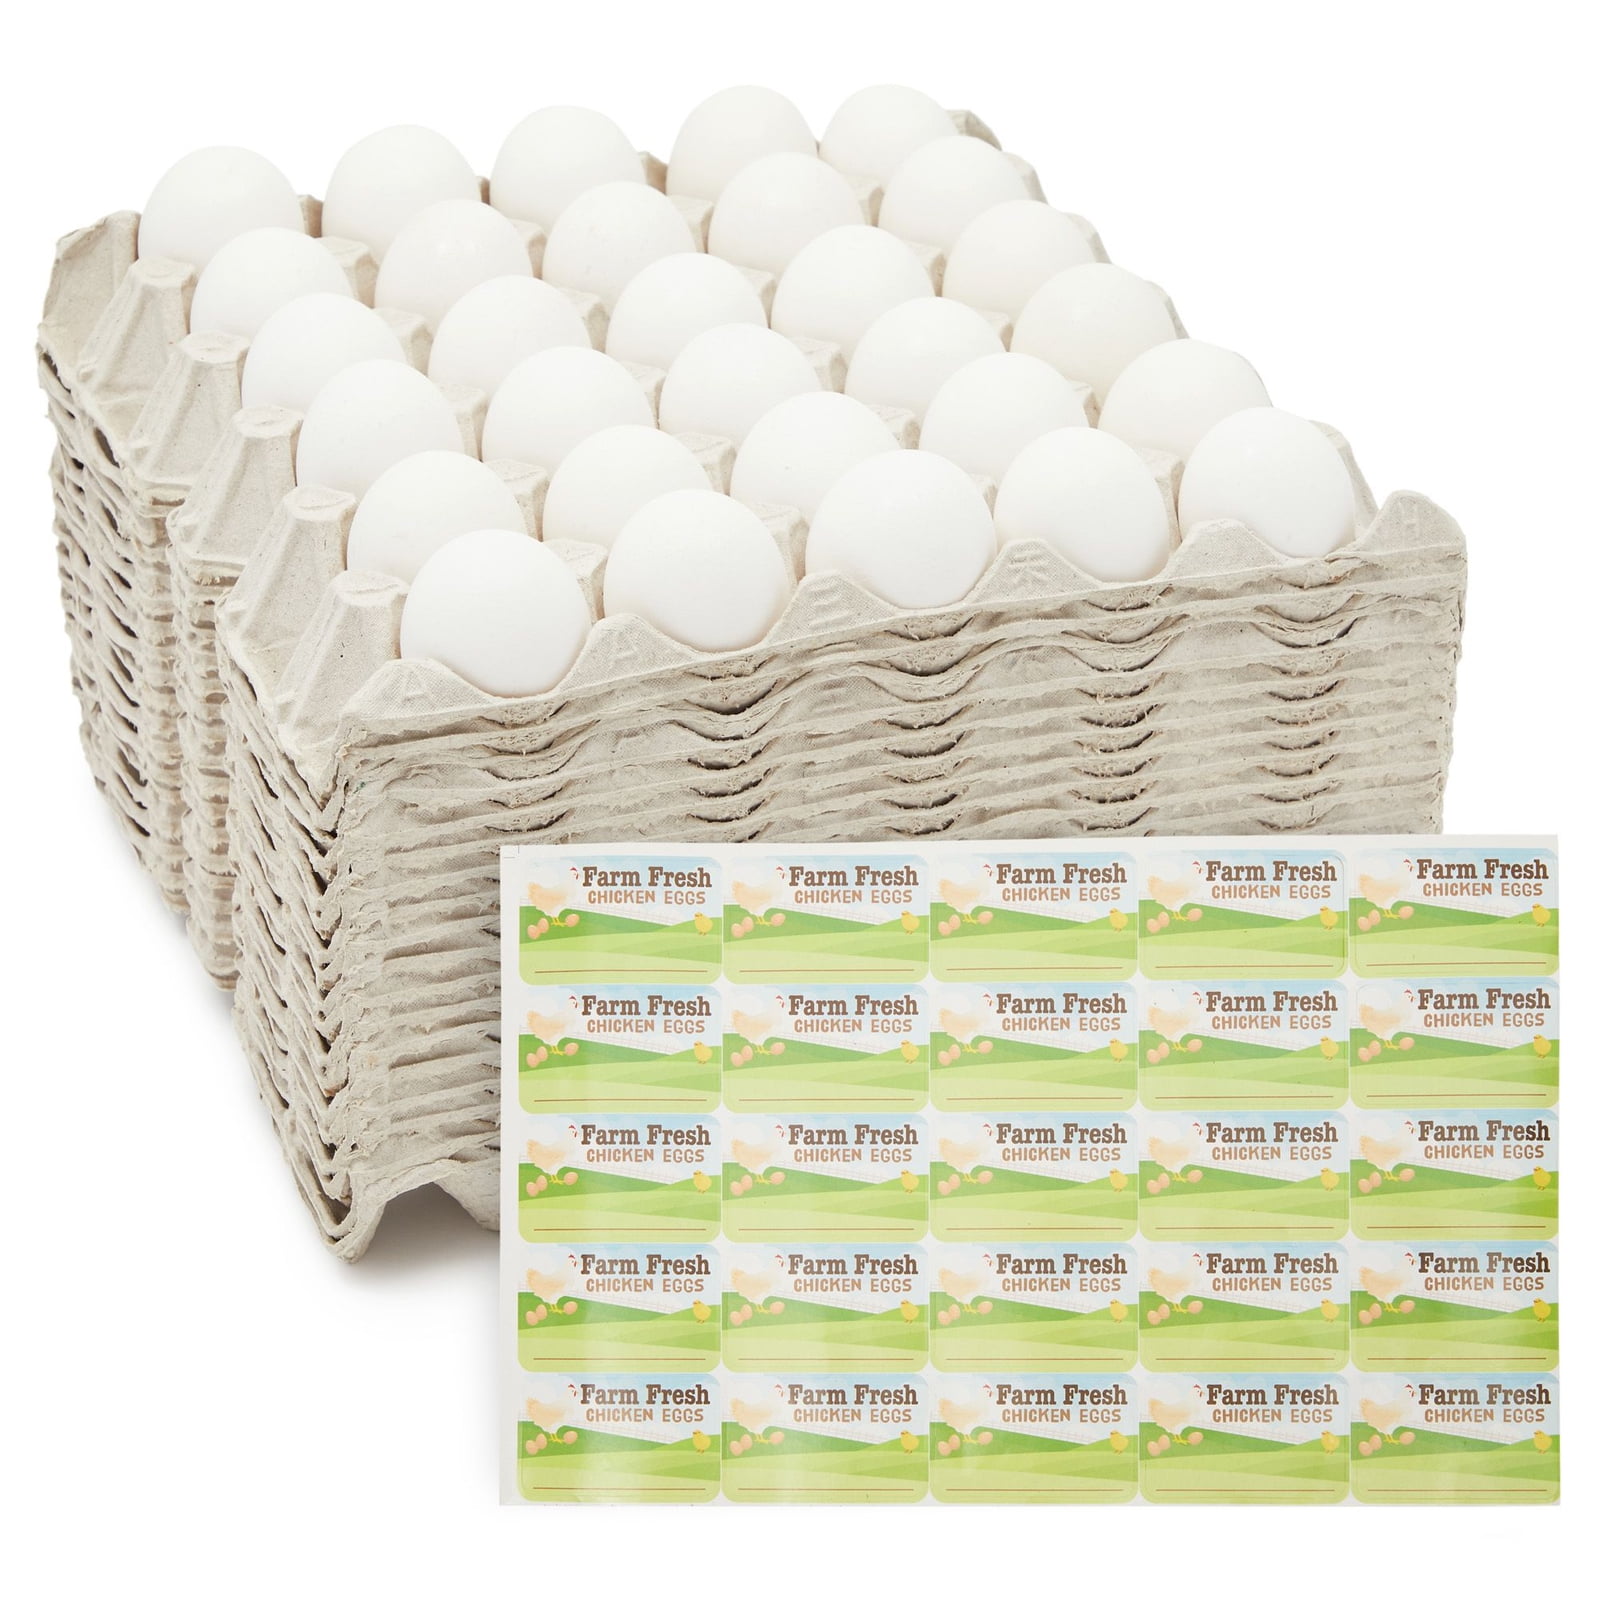 Pintuson Egg Cartons Cheap Bulk Holds Up to 18 Eggs - 40 Pack Clear Plastic  Blank Egg Cartons for Chicken Eggs - Egg Carton Reusable for Home, Chicken